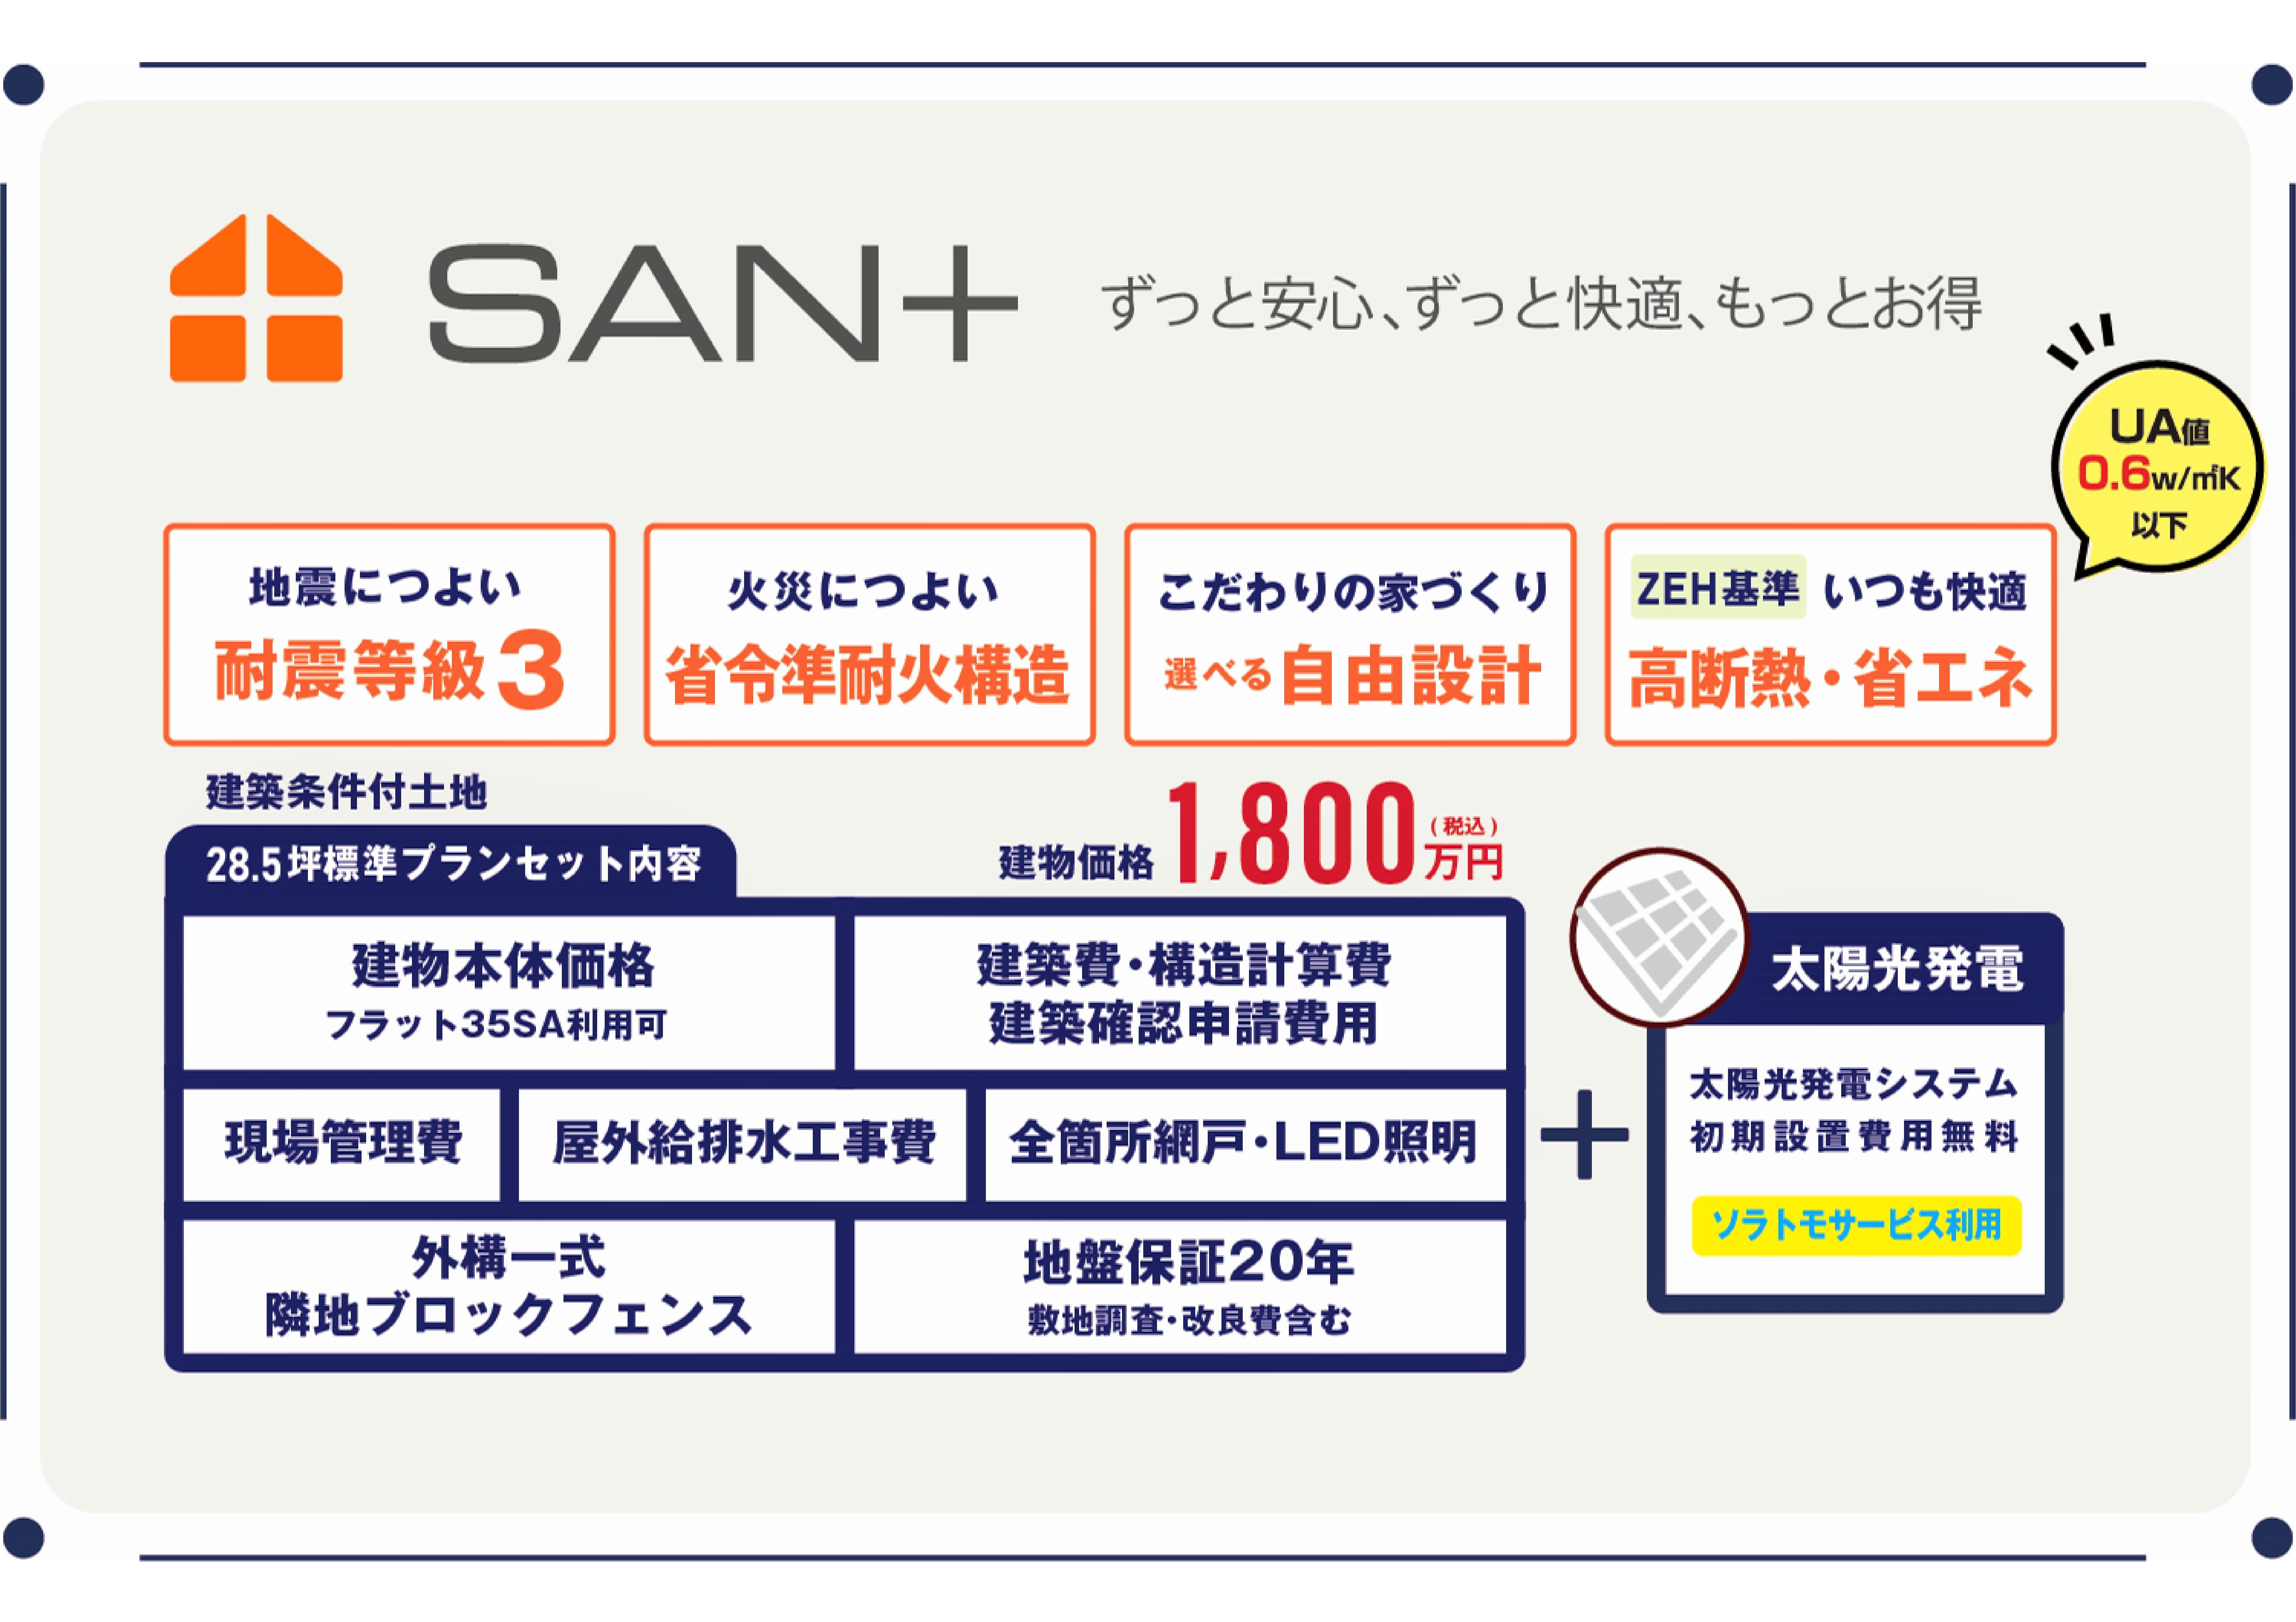 SAN+　高性能住宅　1800万円　ZEH住宅